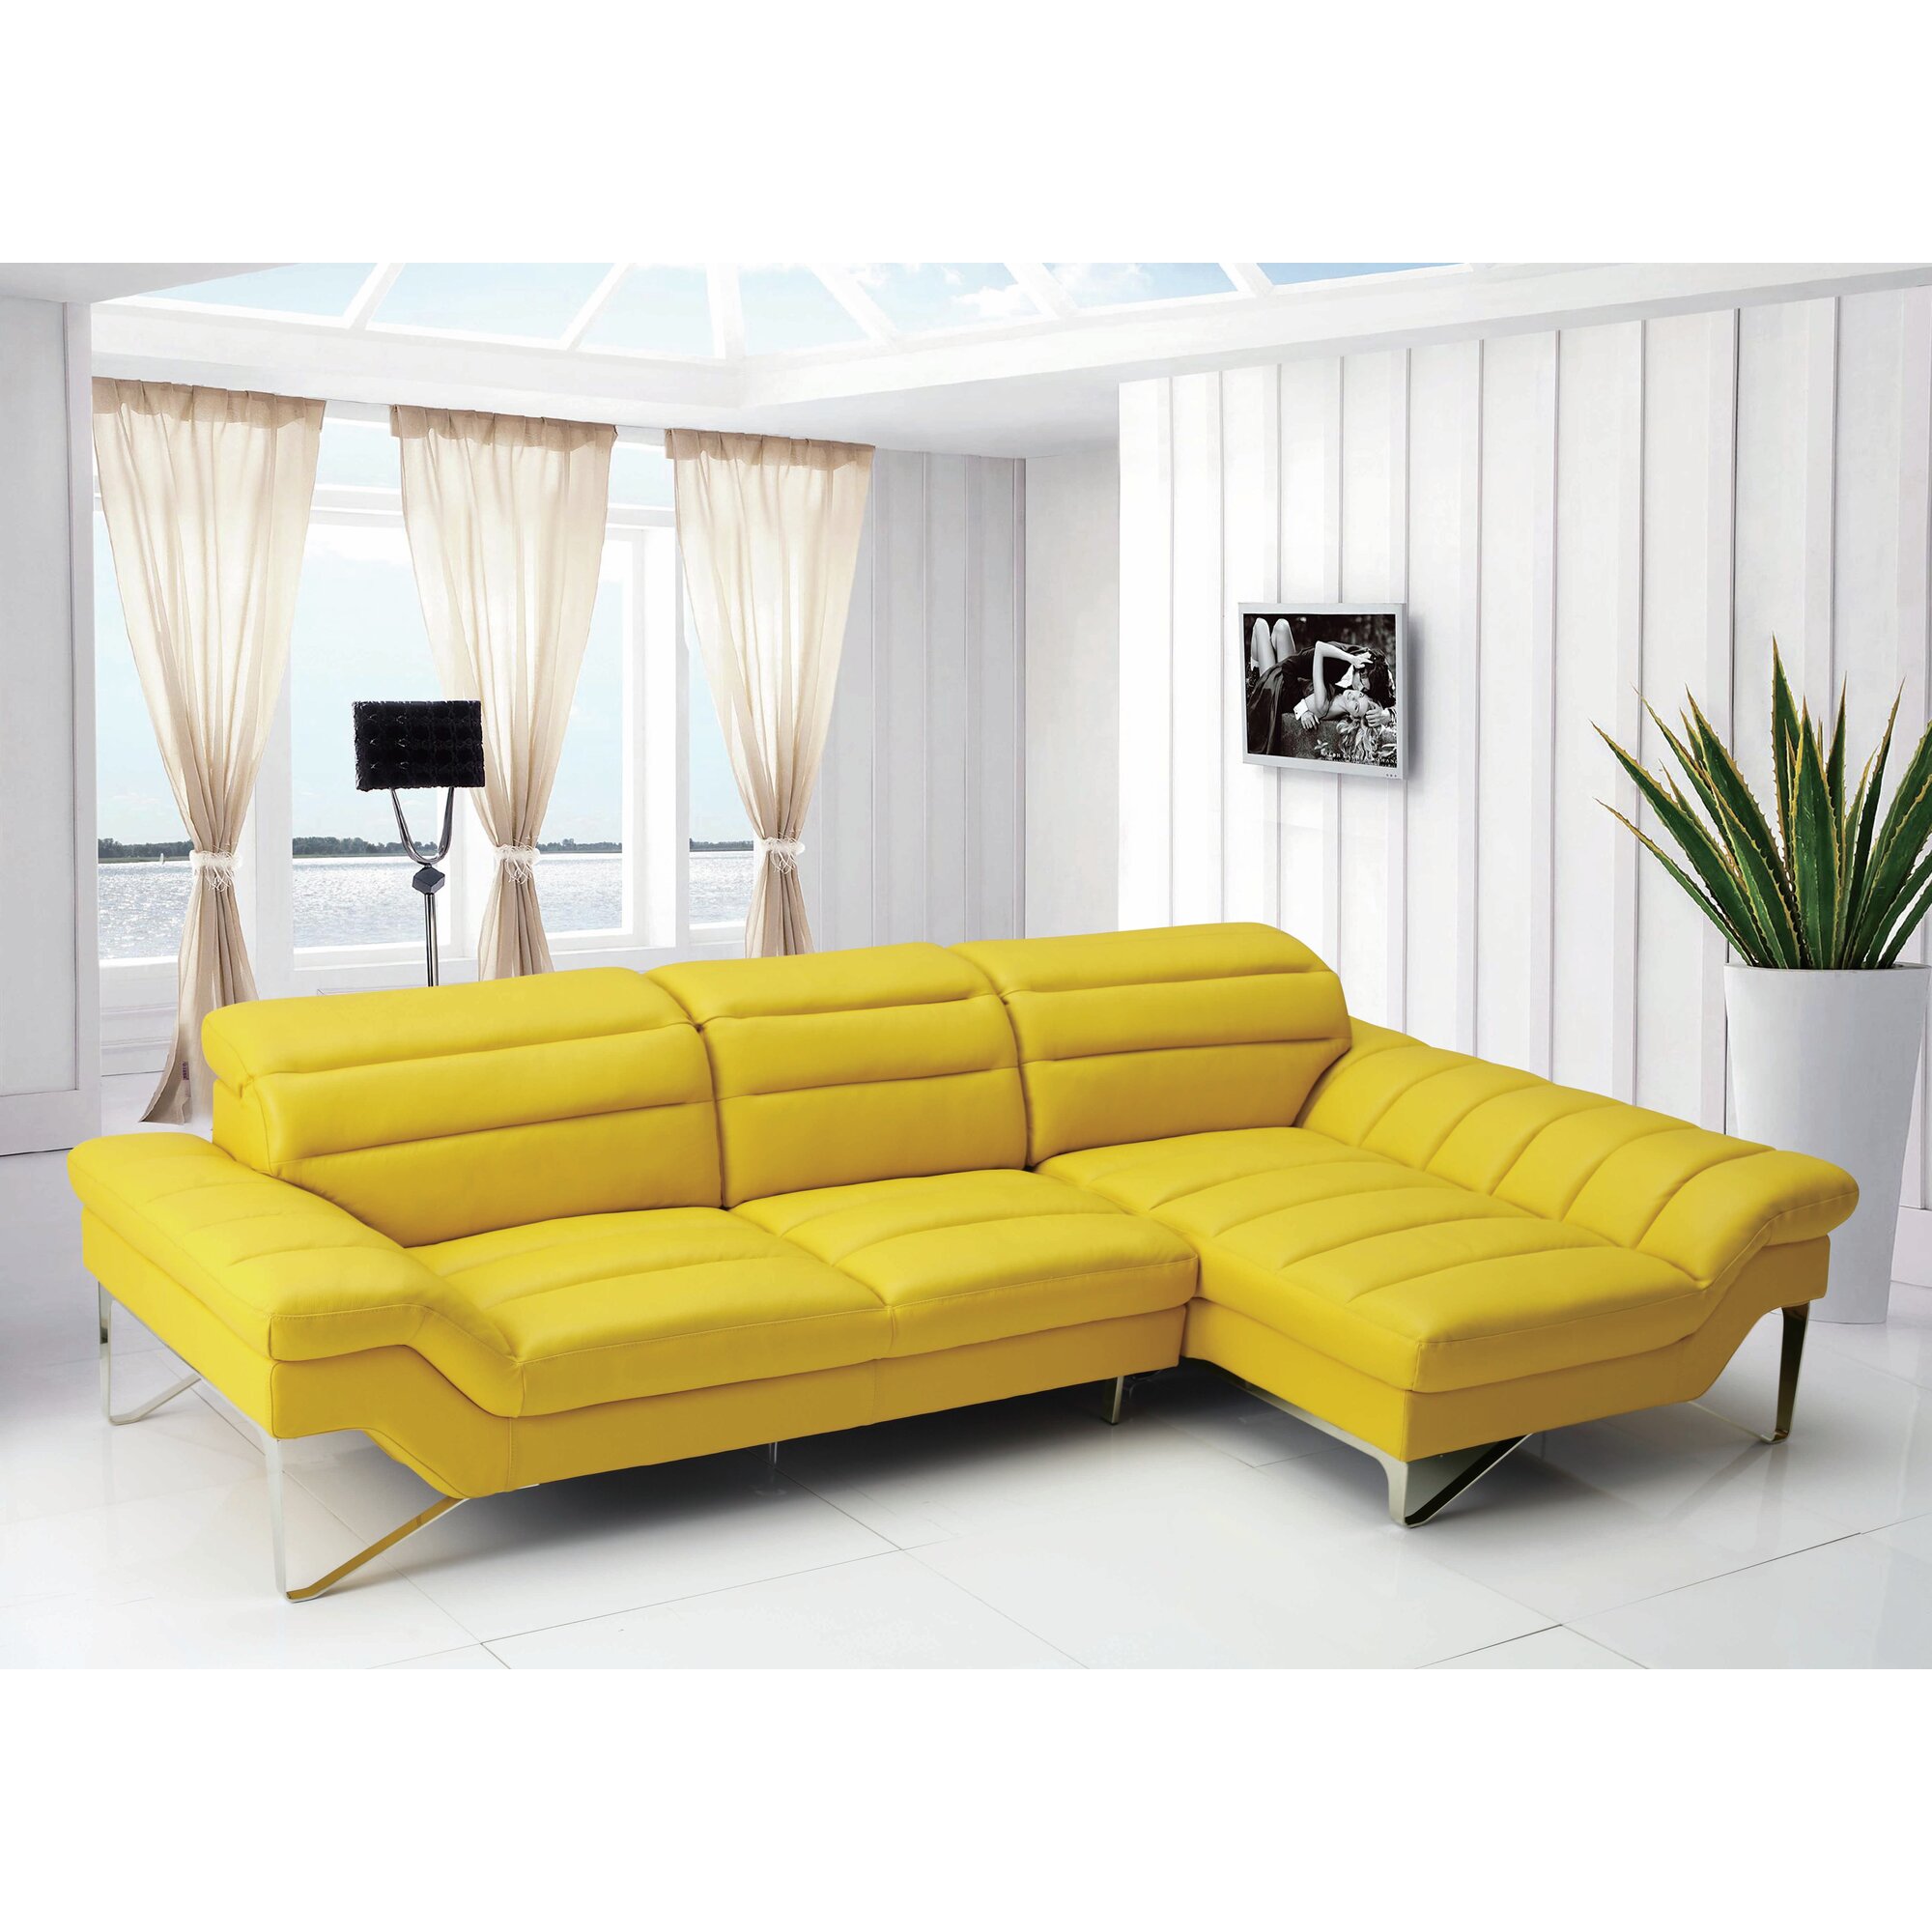 Leather Sofa Yellow